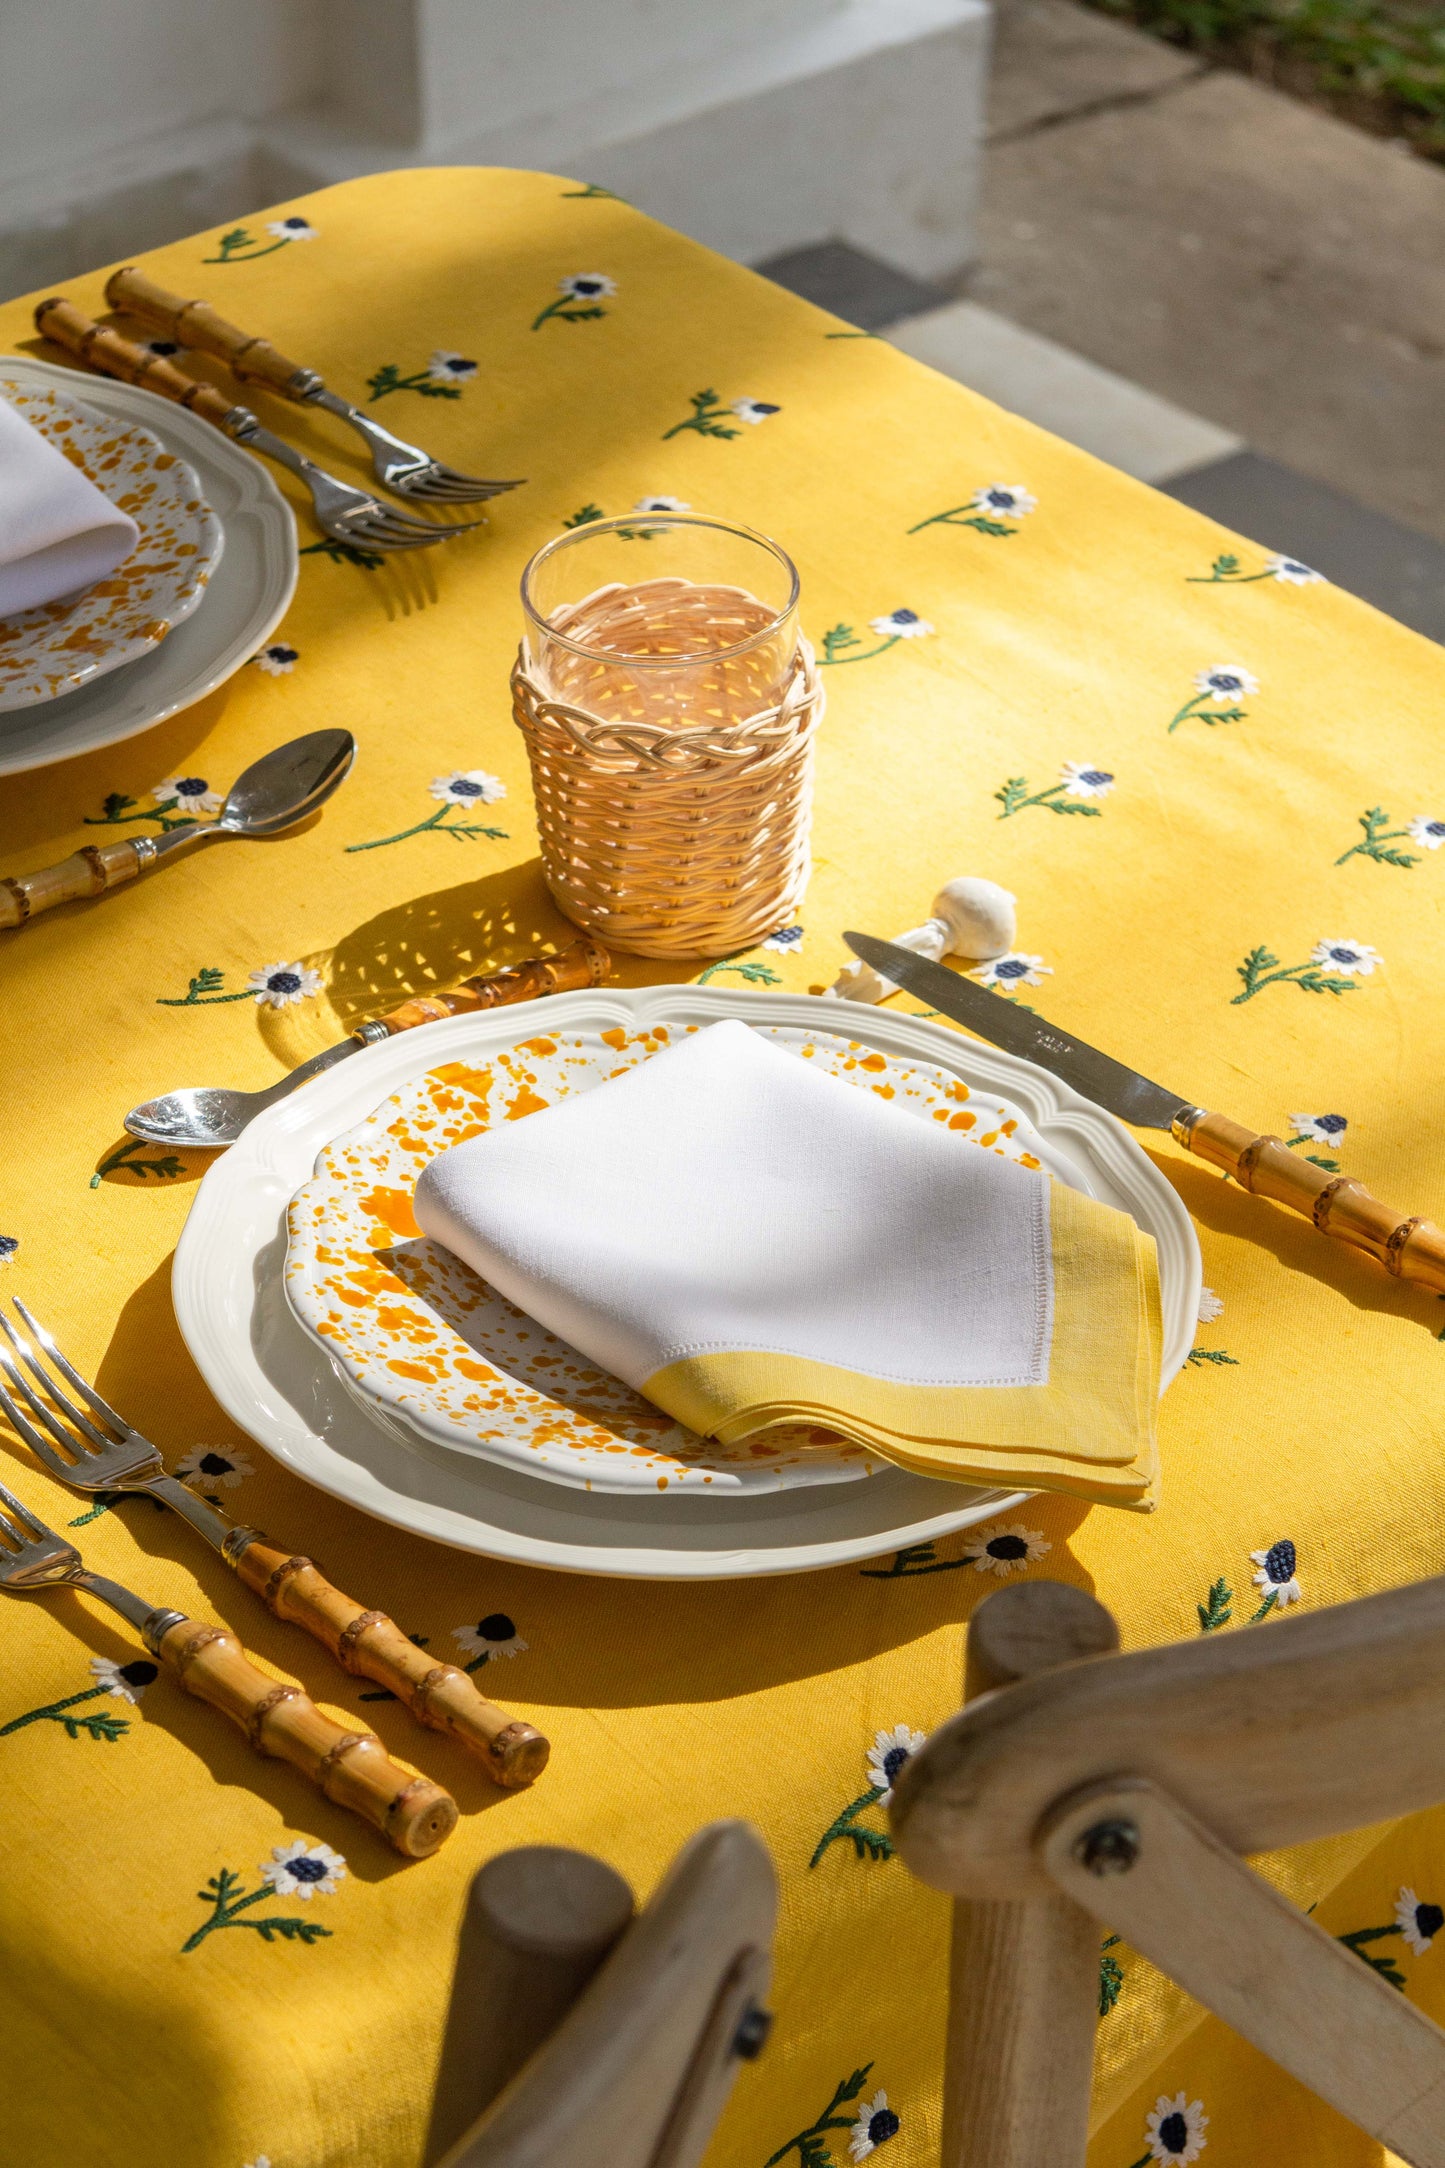 Manzanilla Mustard Rectangular Tablecloth for 8